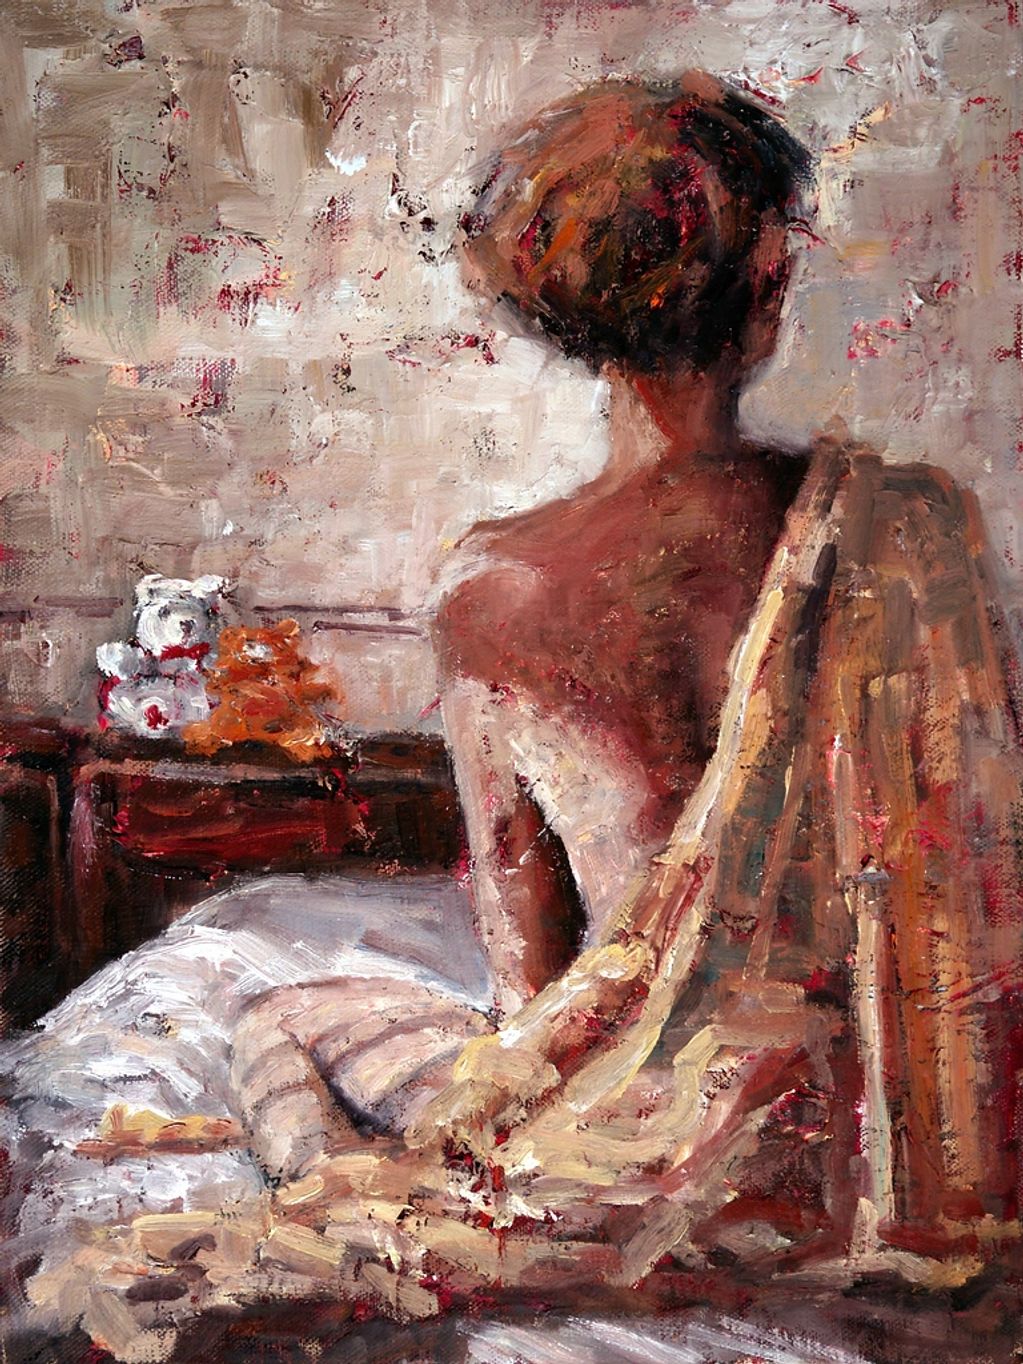 "Good Morning Beautiful" by Irina Milton